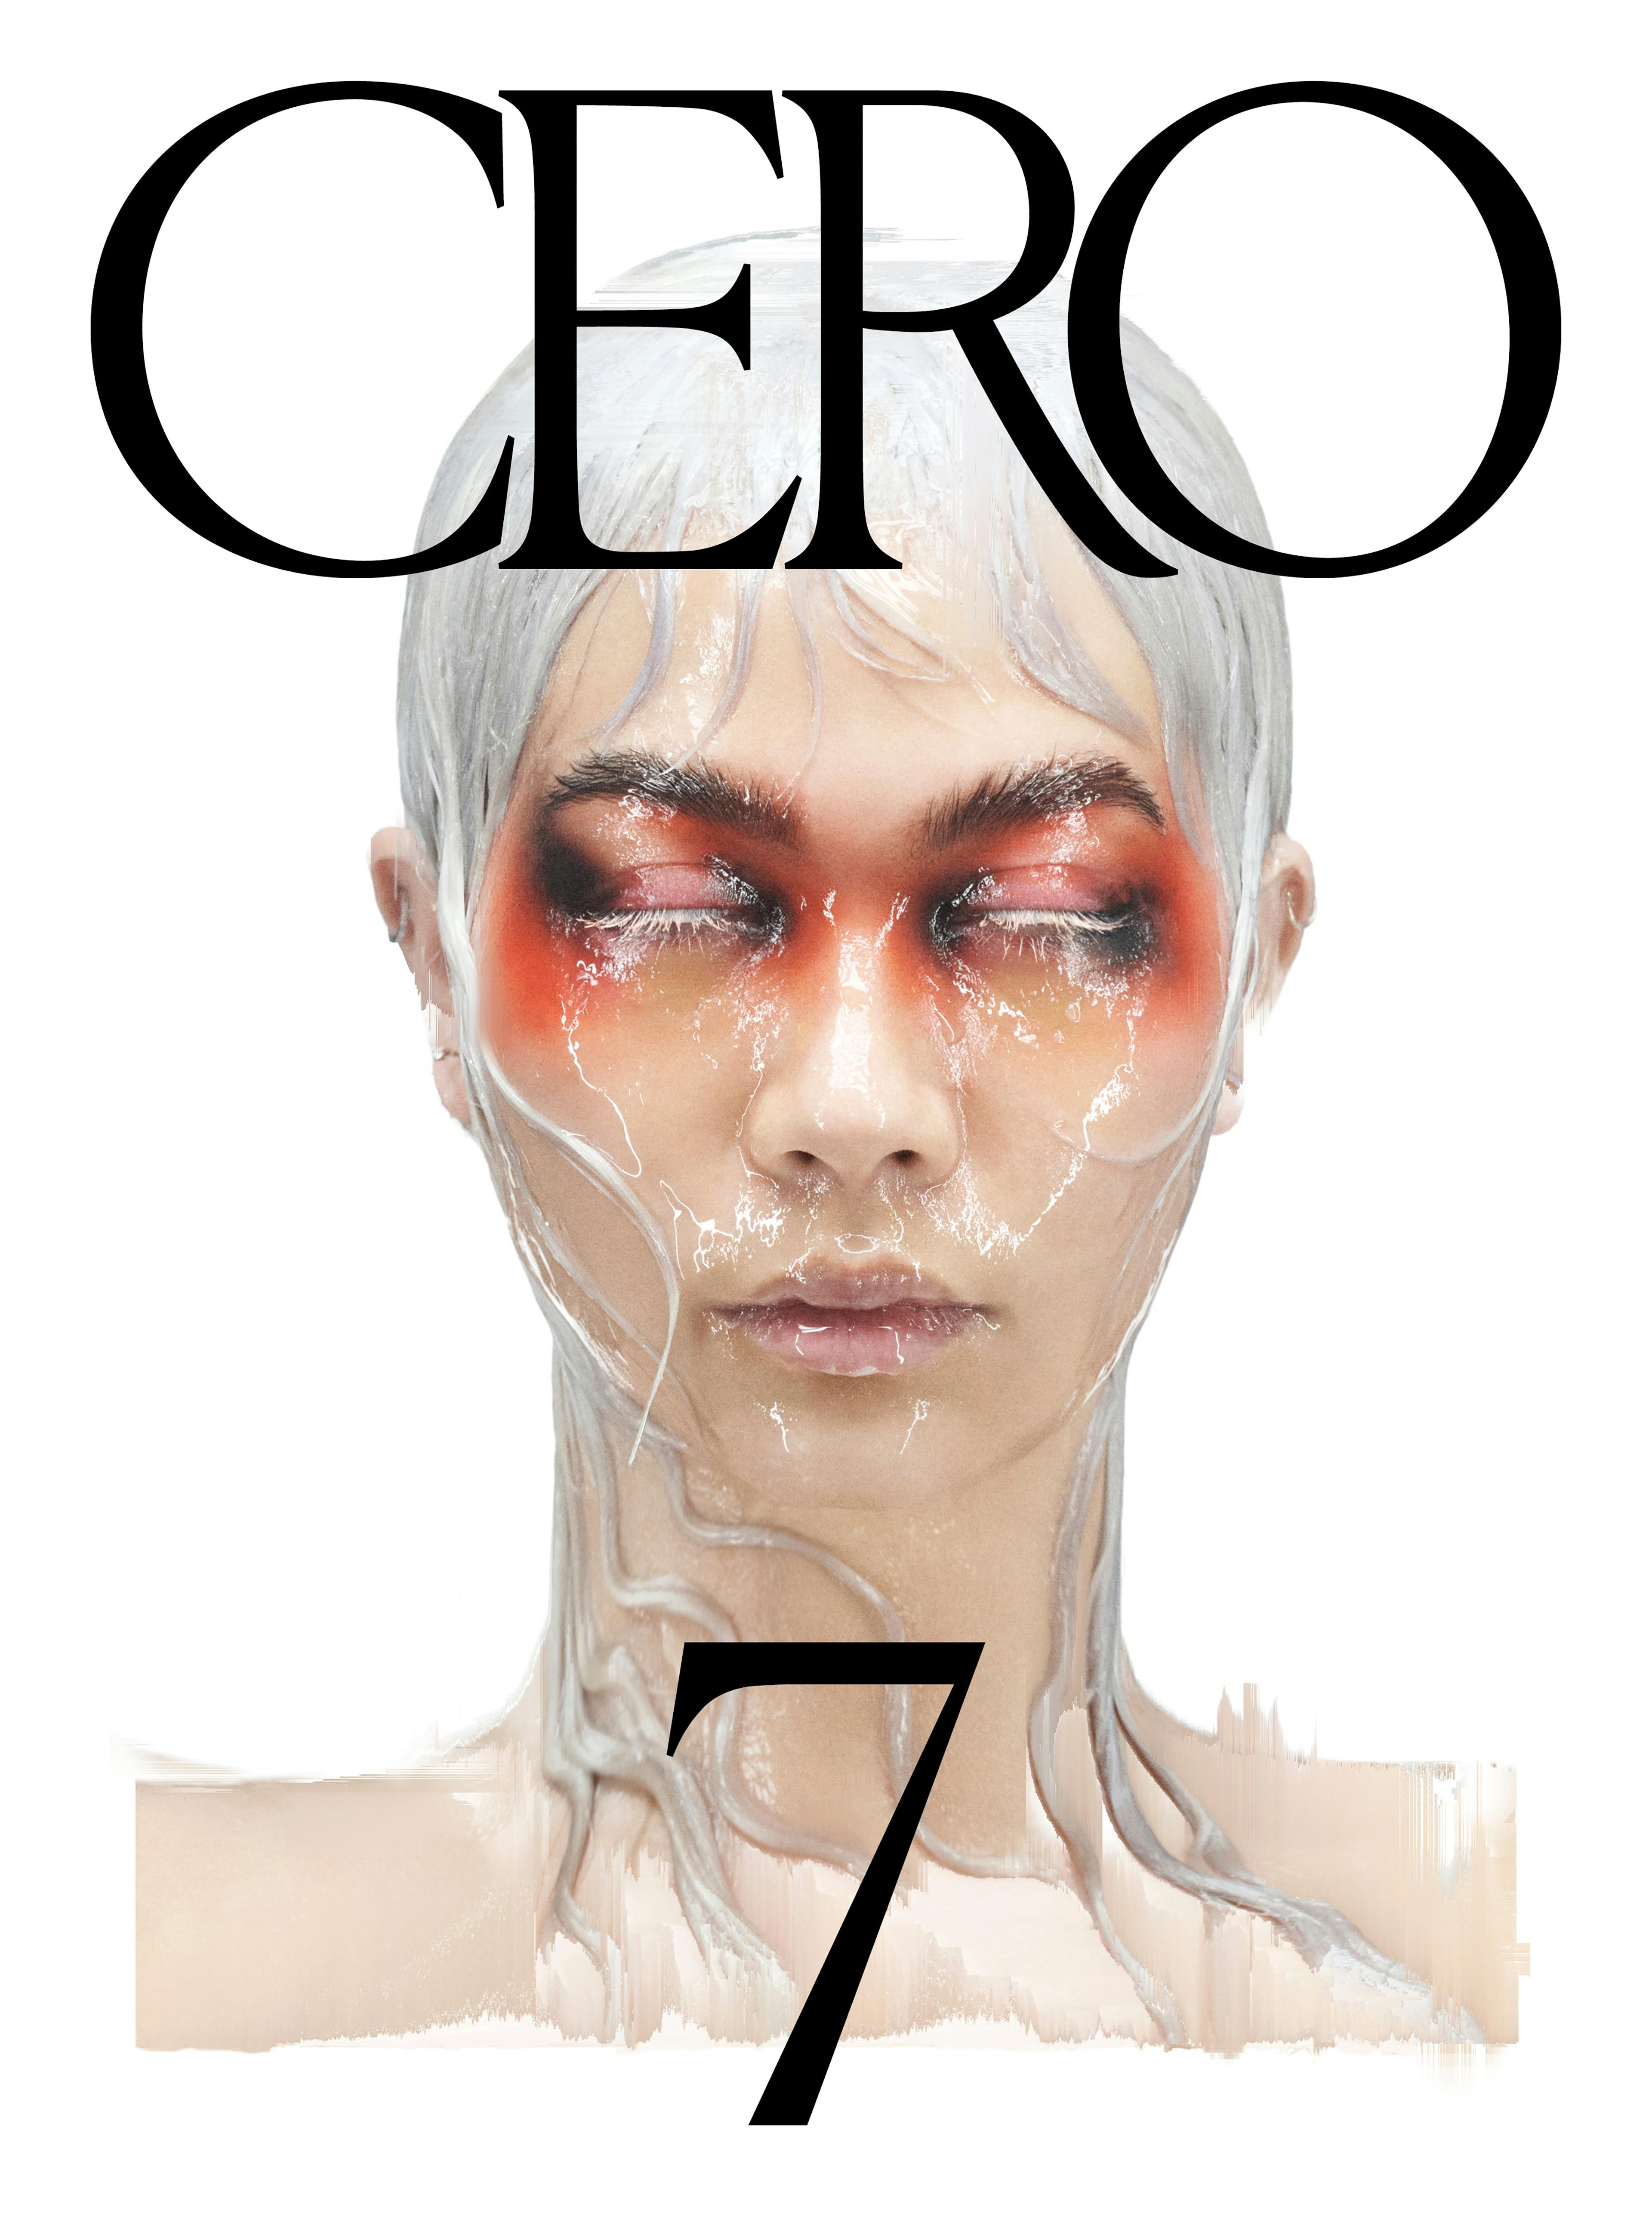 CERO07 - Hayley Kiyoko